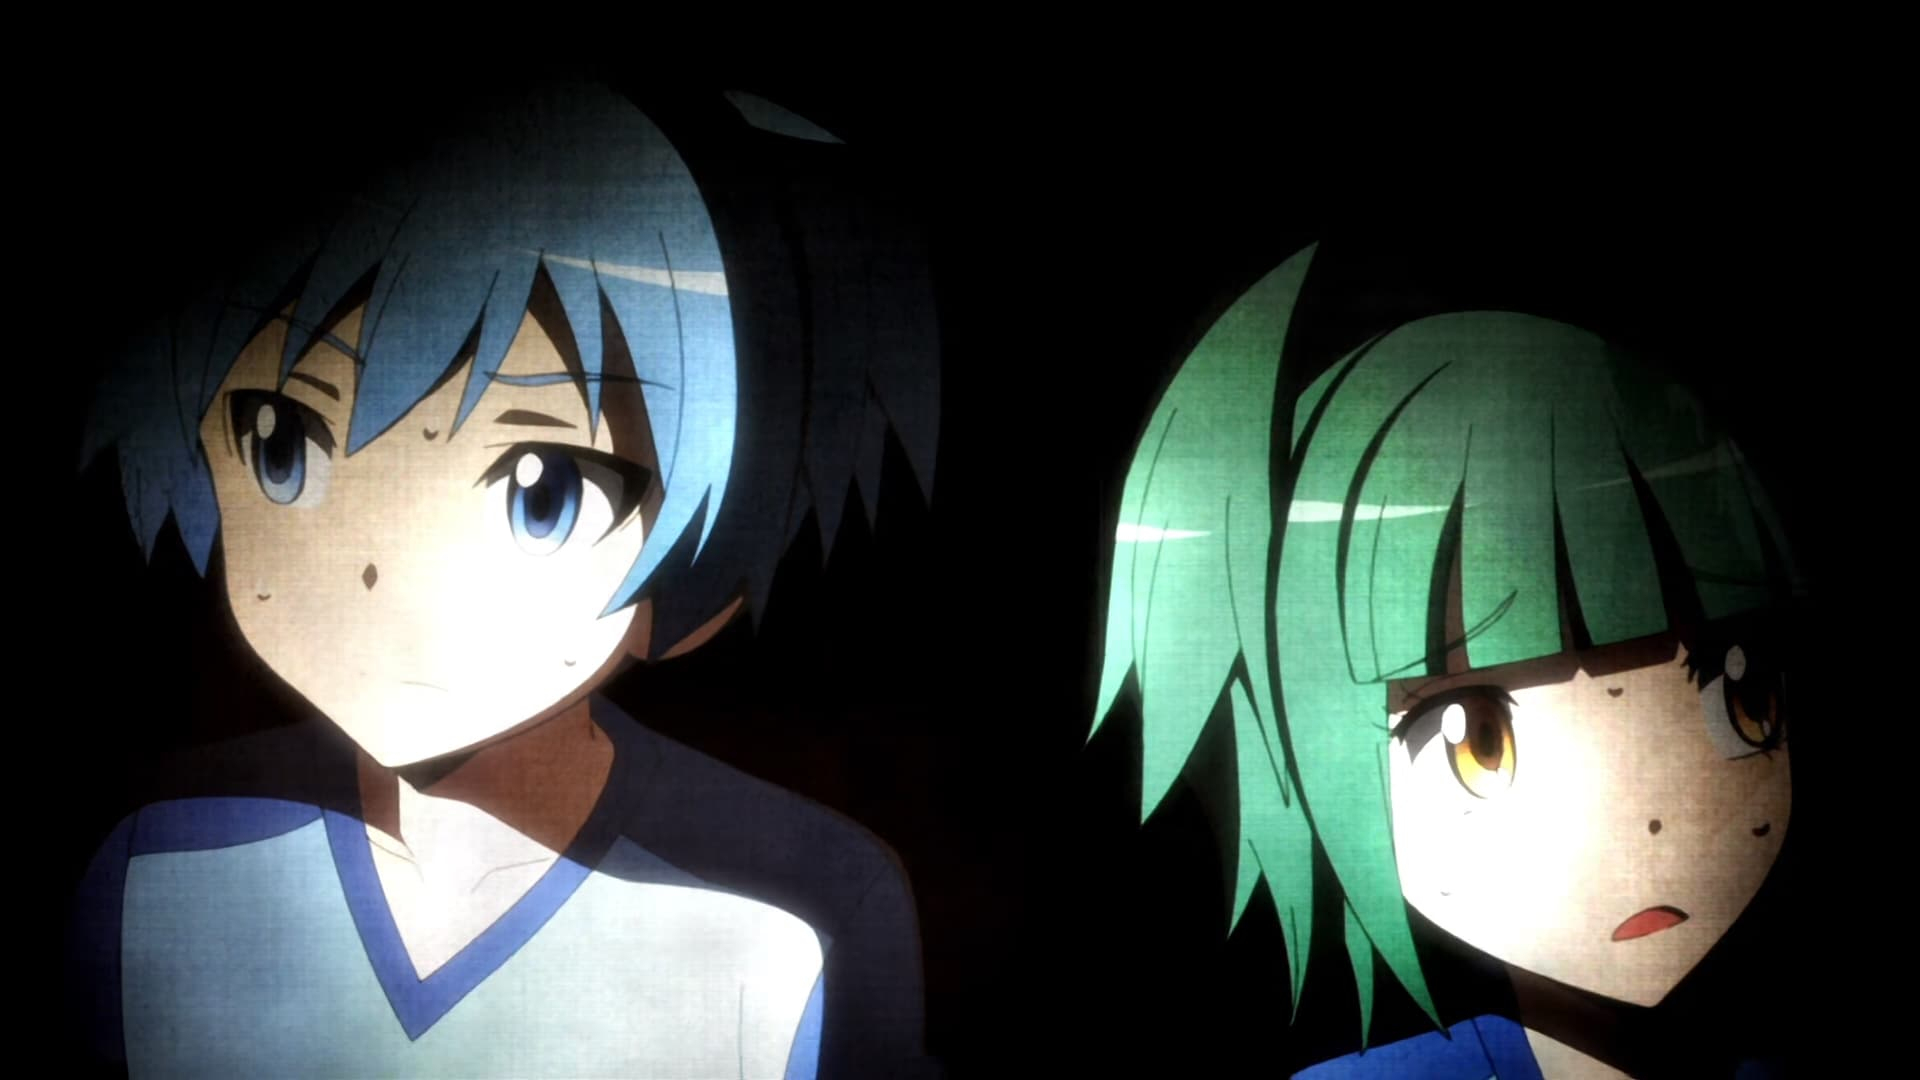 Anime Assassination Classroom - Temporada 2 Episodio 1 encequiconcerne Notan Facile